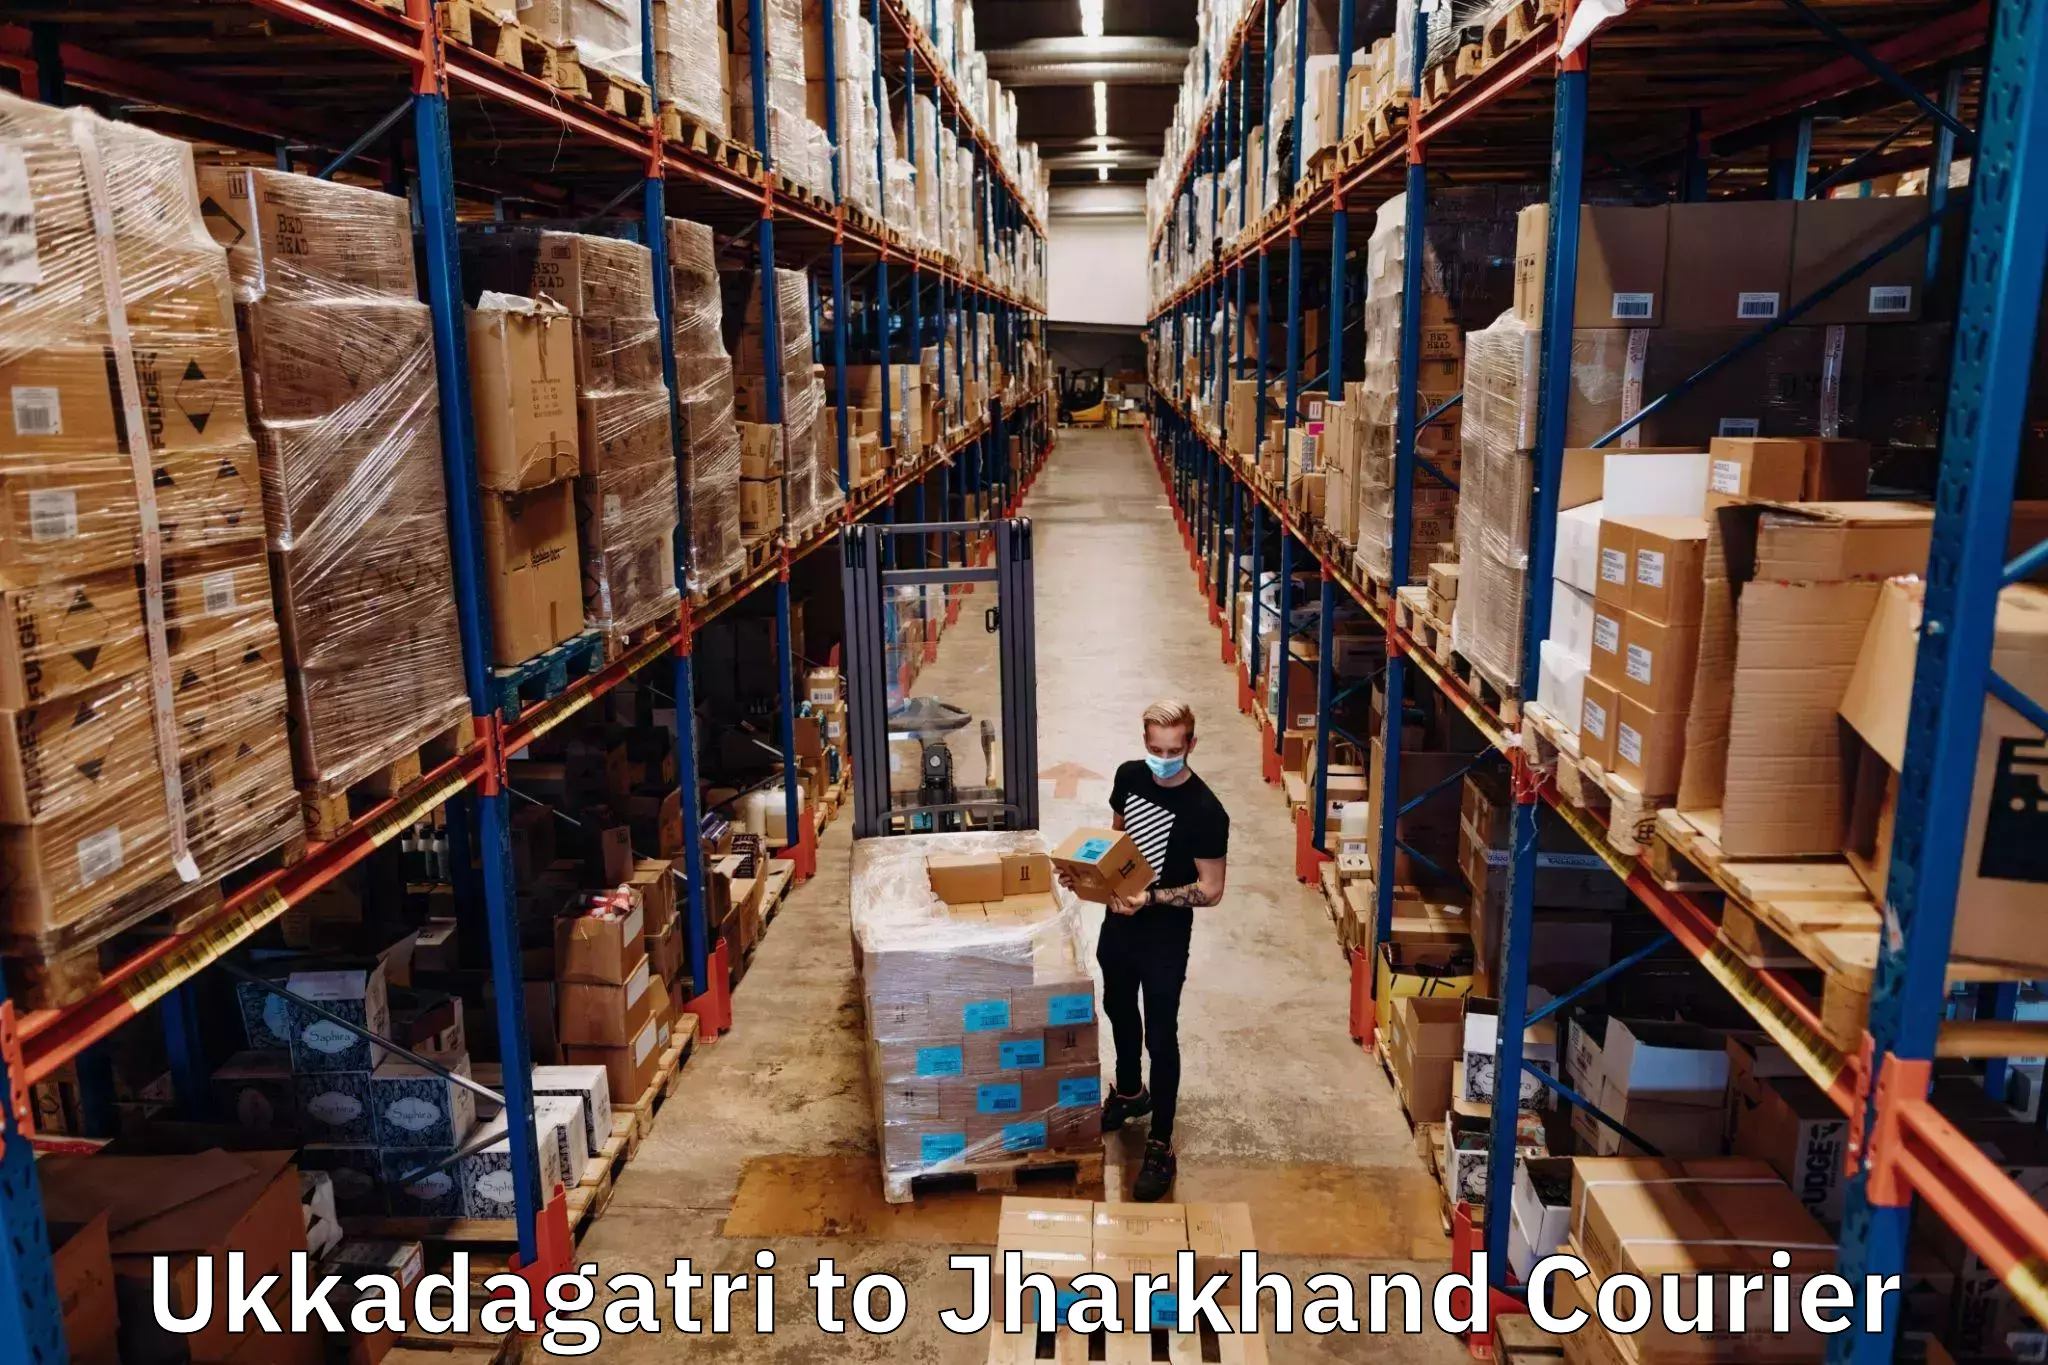 Courier service booking Ukkadagatri to Jharkhand